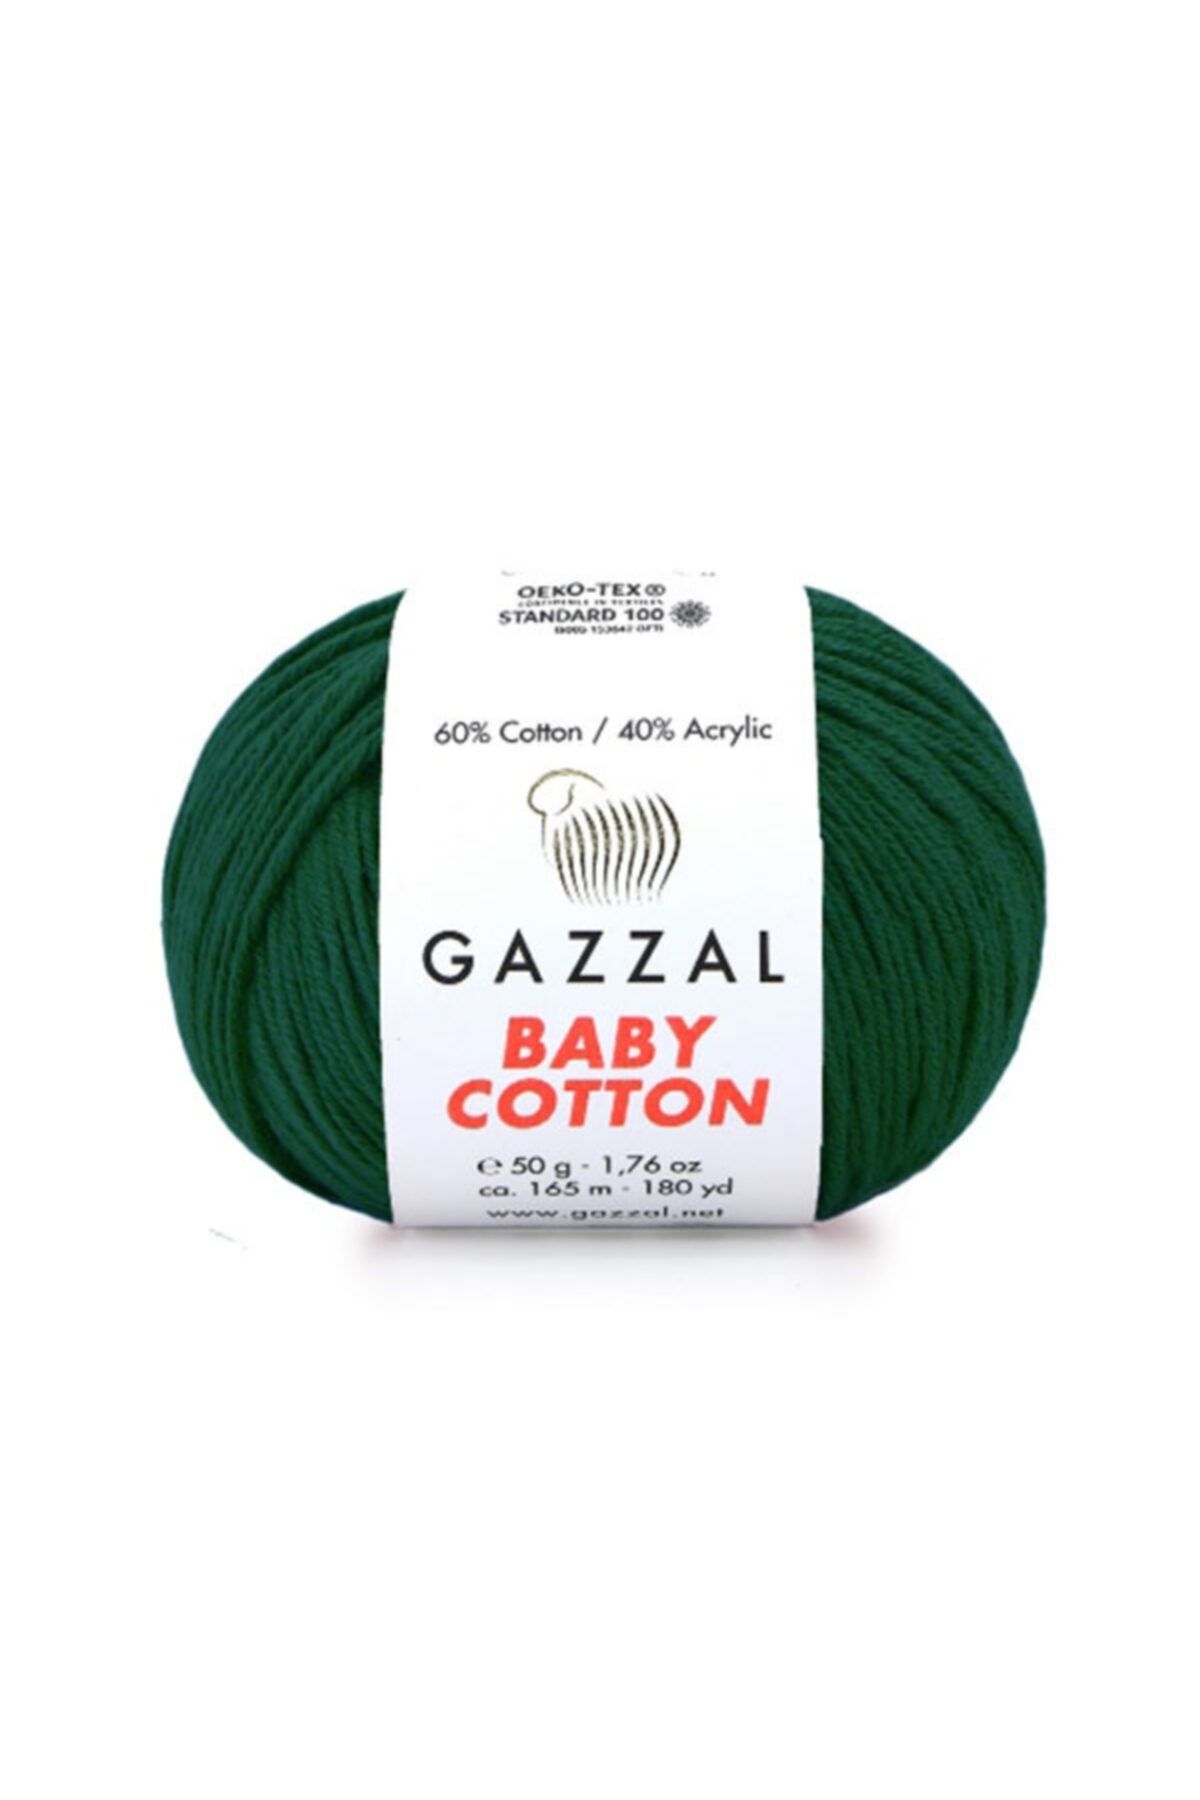 Gazzal Baby Cotton Amigurumi Ipi Acı Yeşil - 3467 - 50 Gr. Punch Ipi